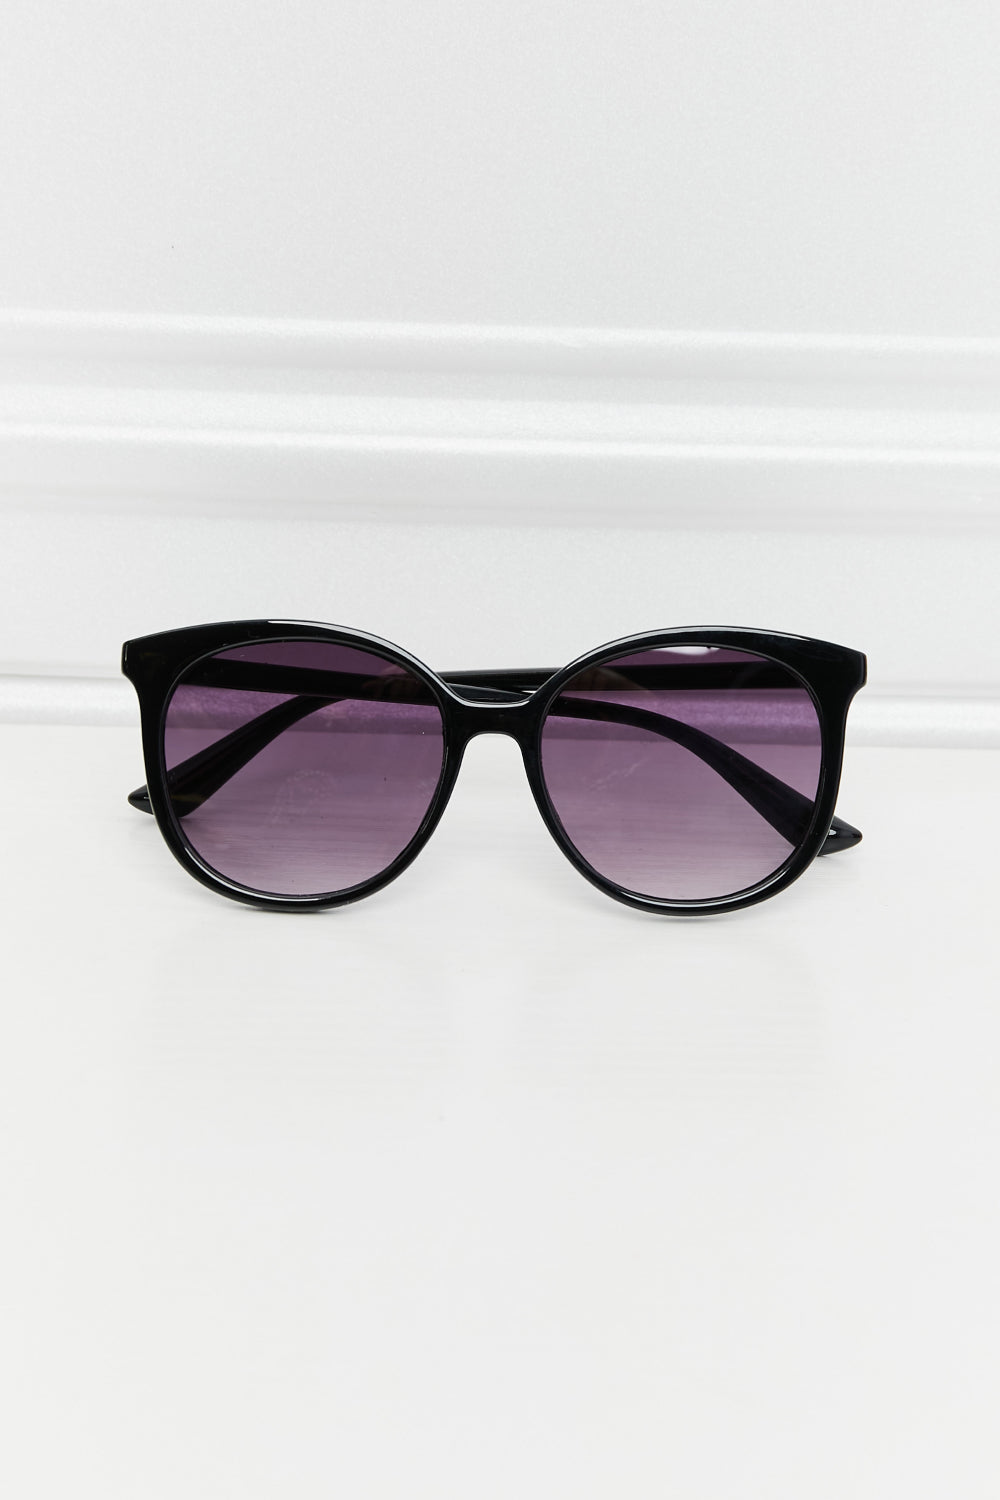 Polycarbonate Frame Full Rim Sunglasses - Tigbul's Variety Fashion Shop